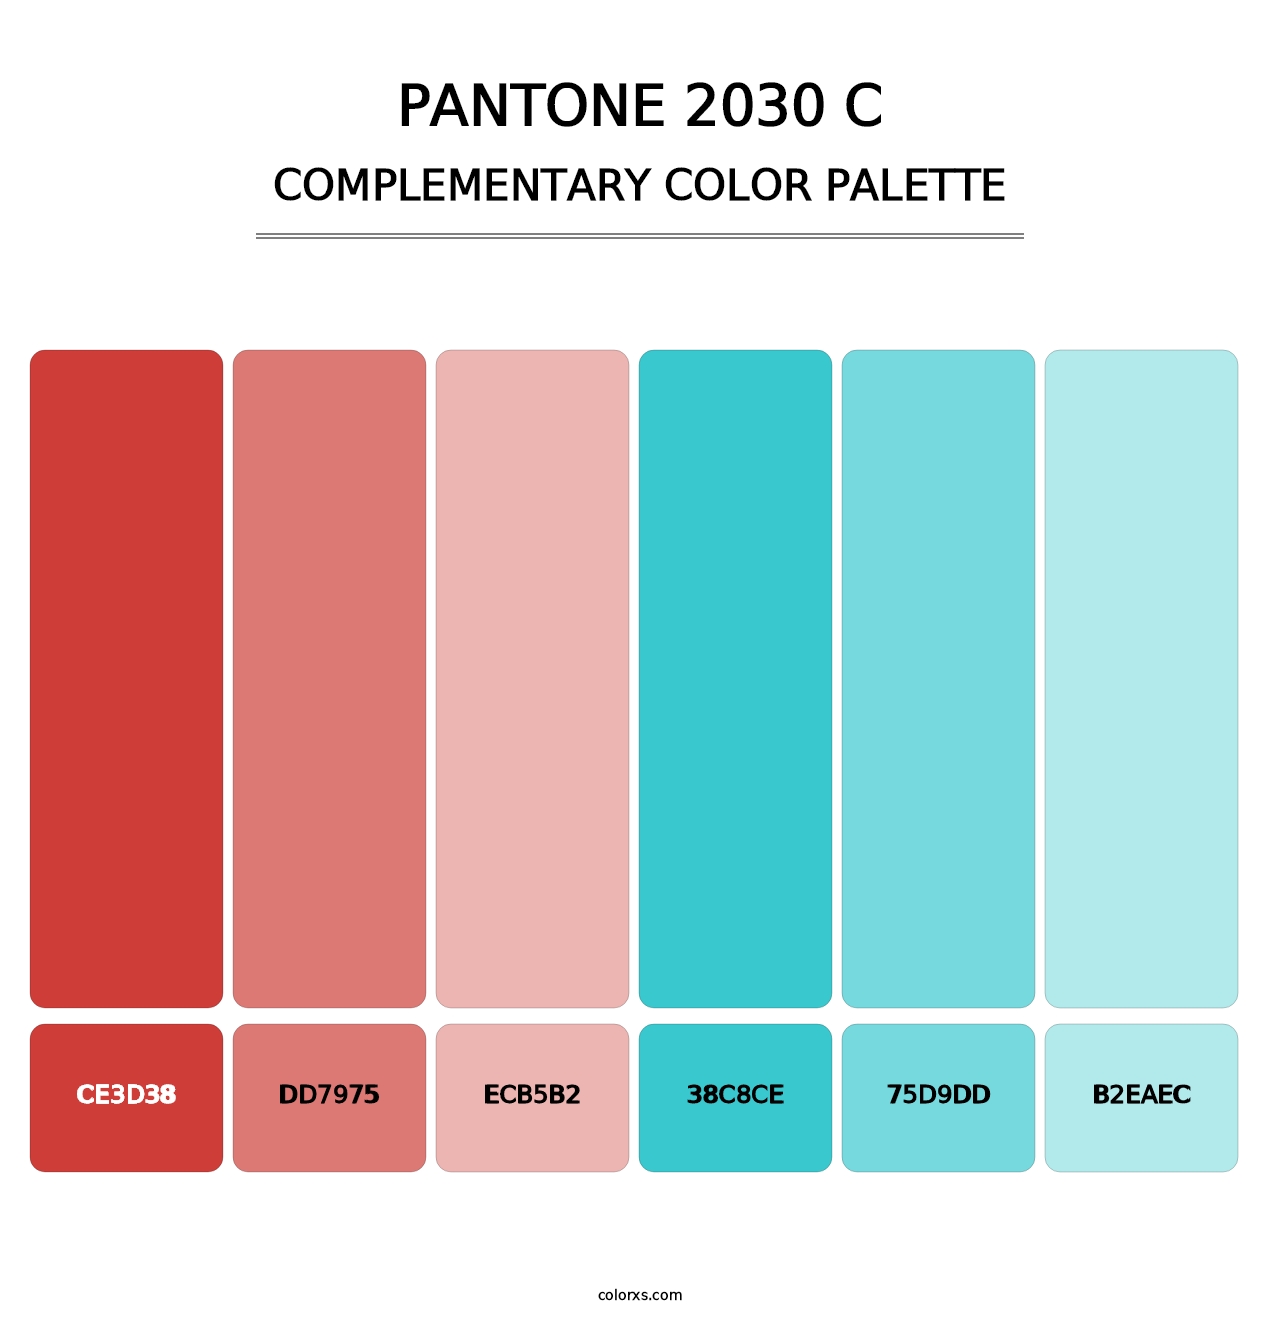 PANTONE 2030 C - Complementary Color Palette